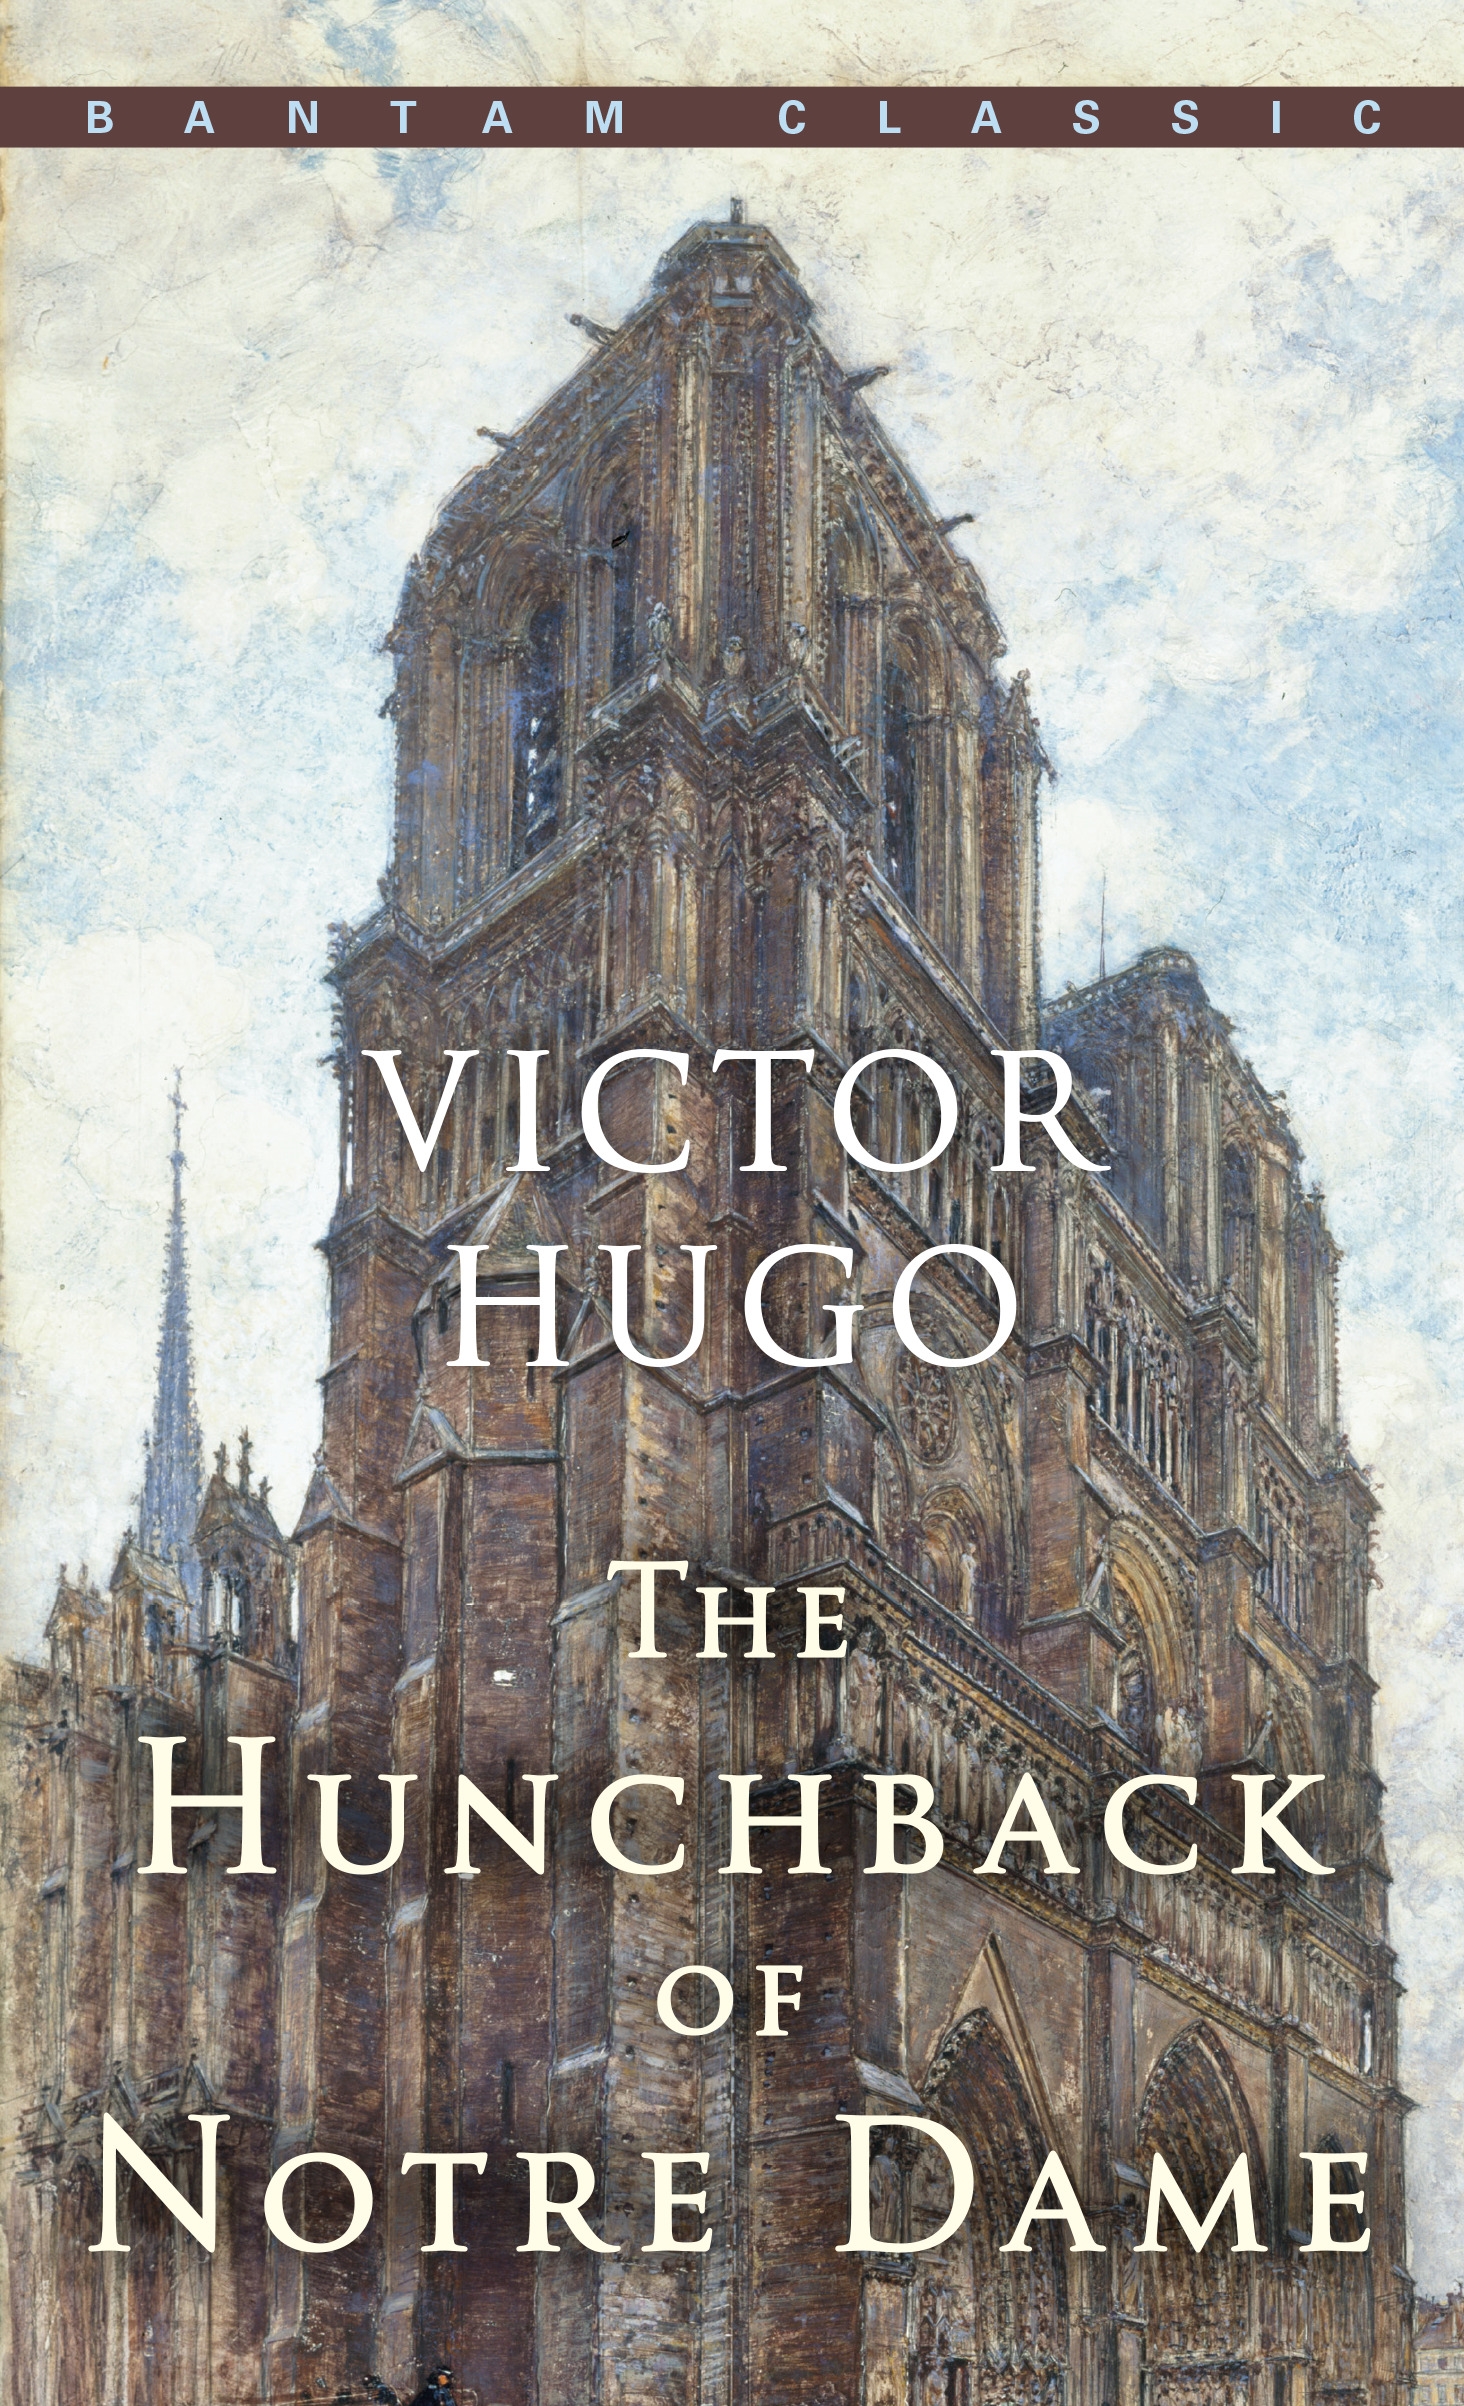 Hunchback/Notre Dame by Victor Hugo - Penguin Books Australia